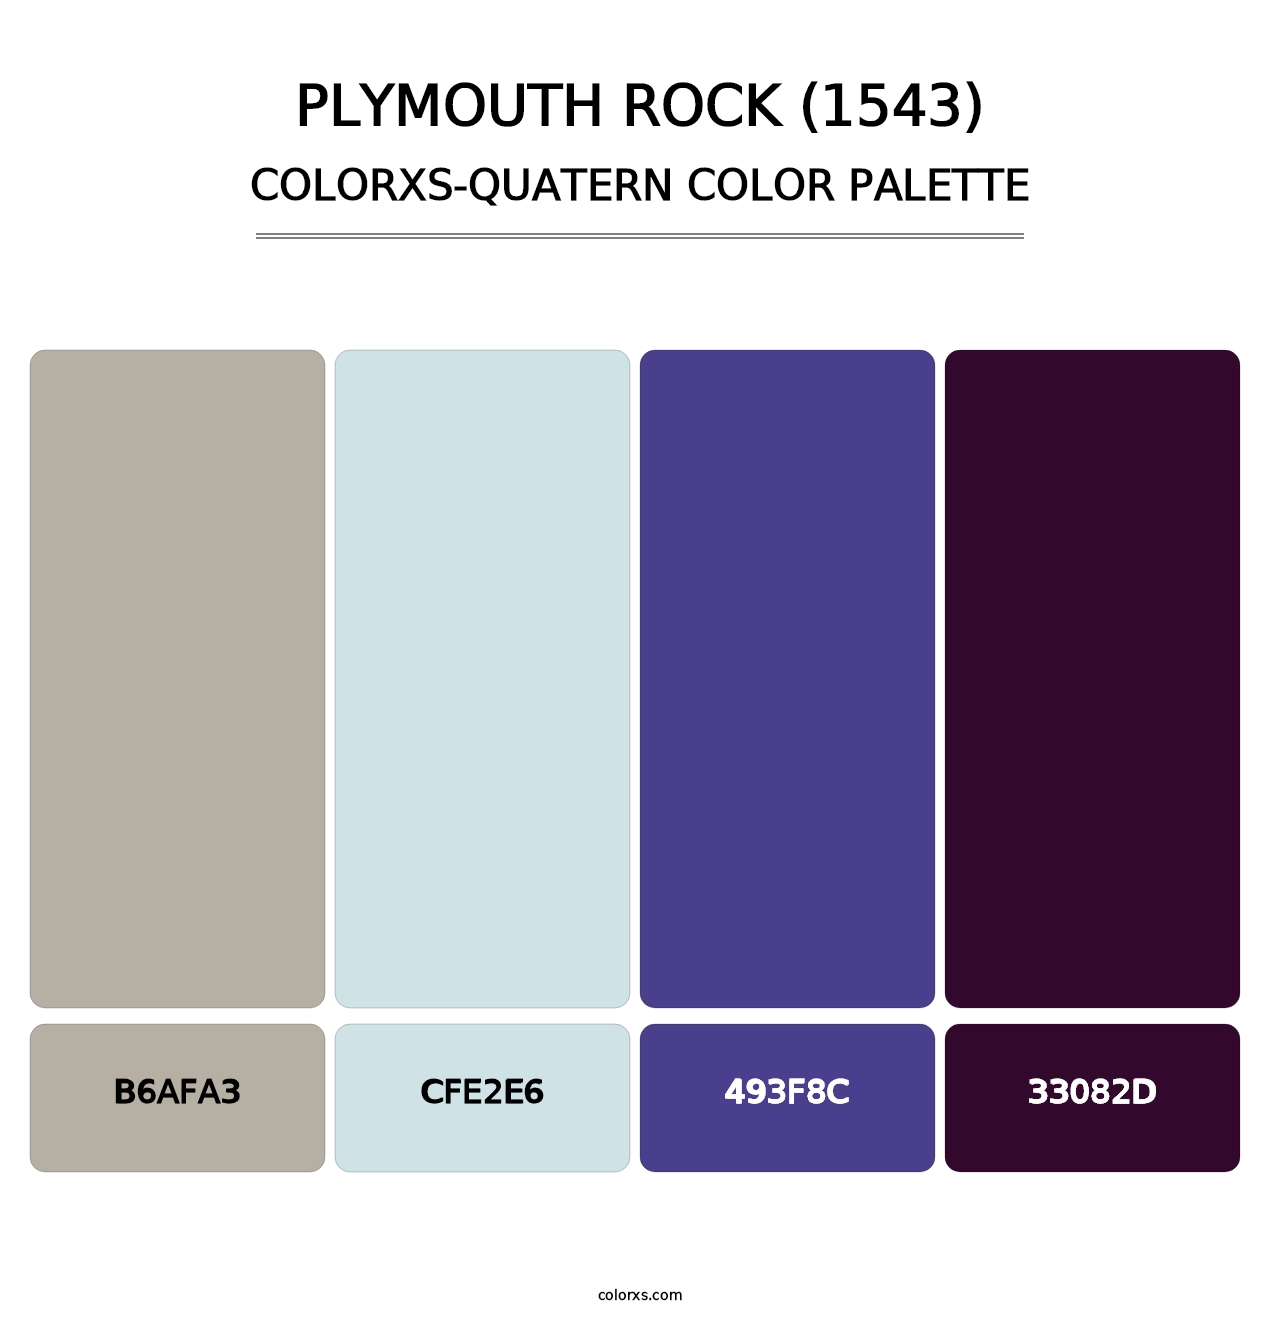 Plymouth Rock (1543) - Colorxs Quatern Palette